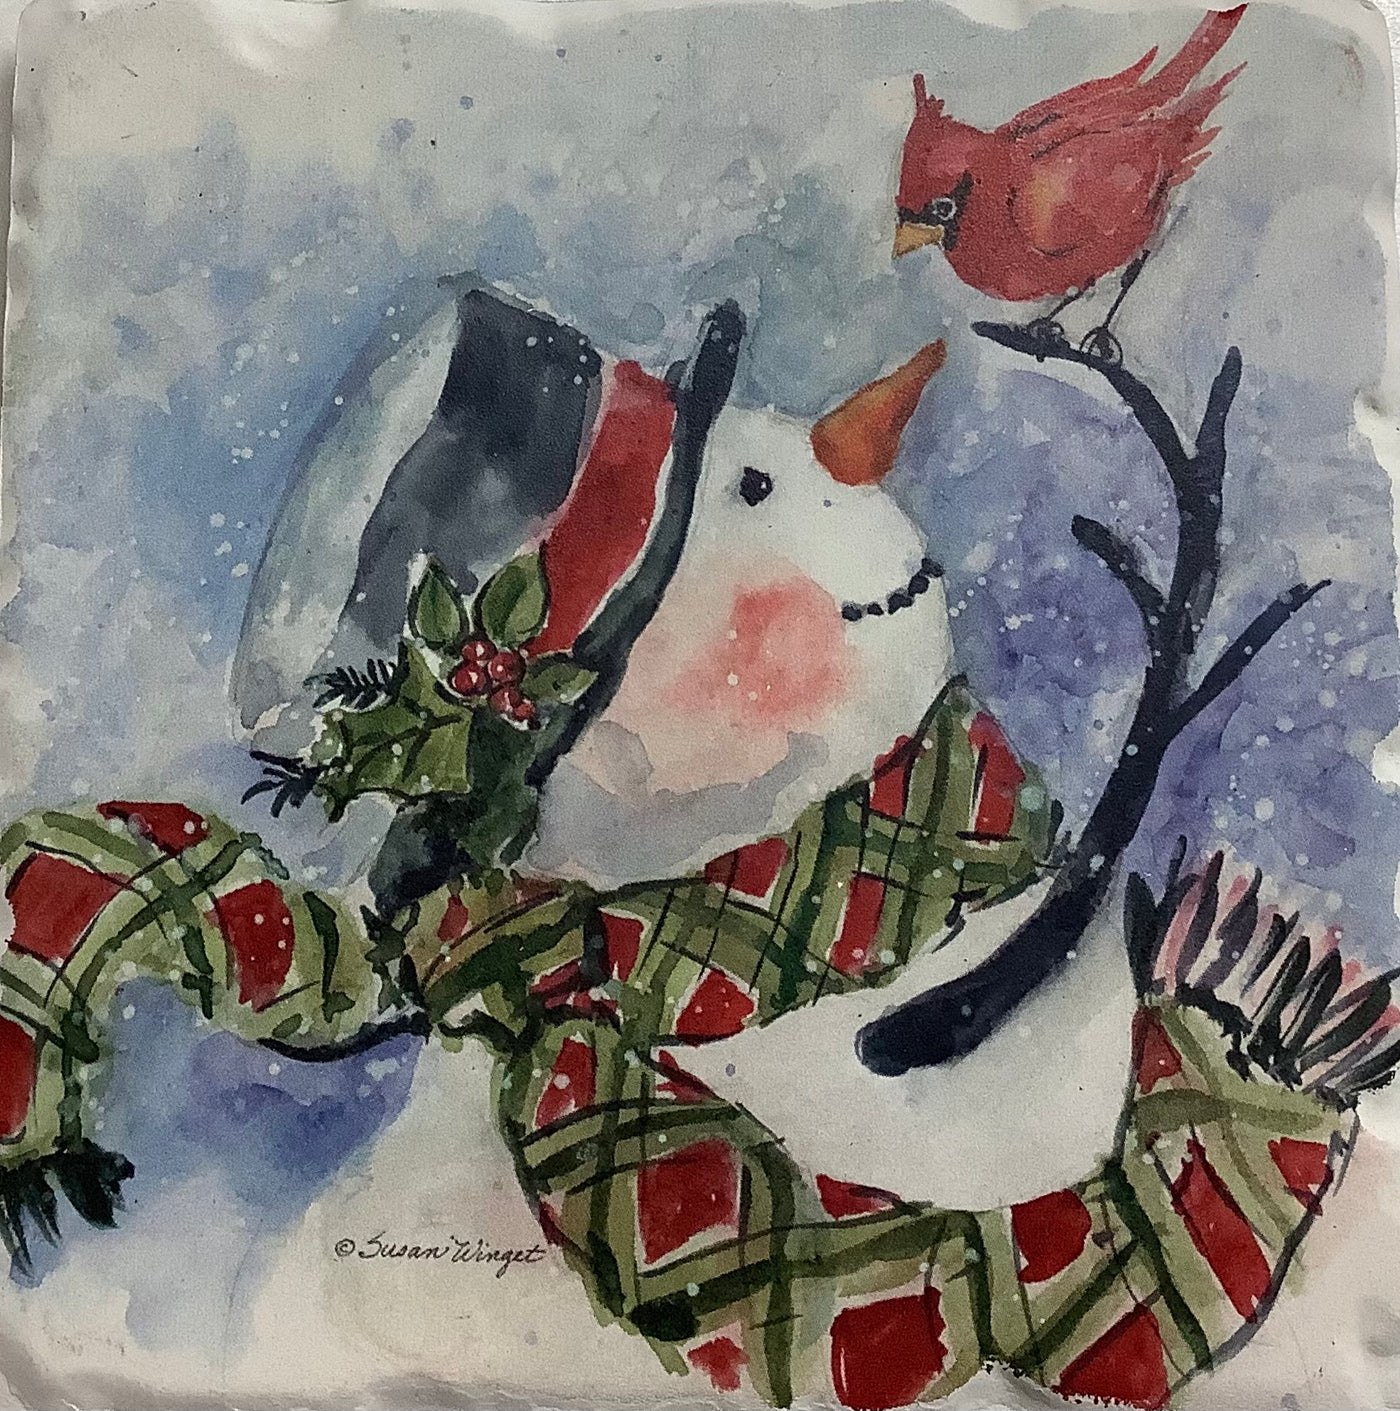 Snowman/Santa Absorbent Stone Coaster